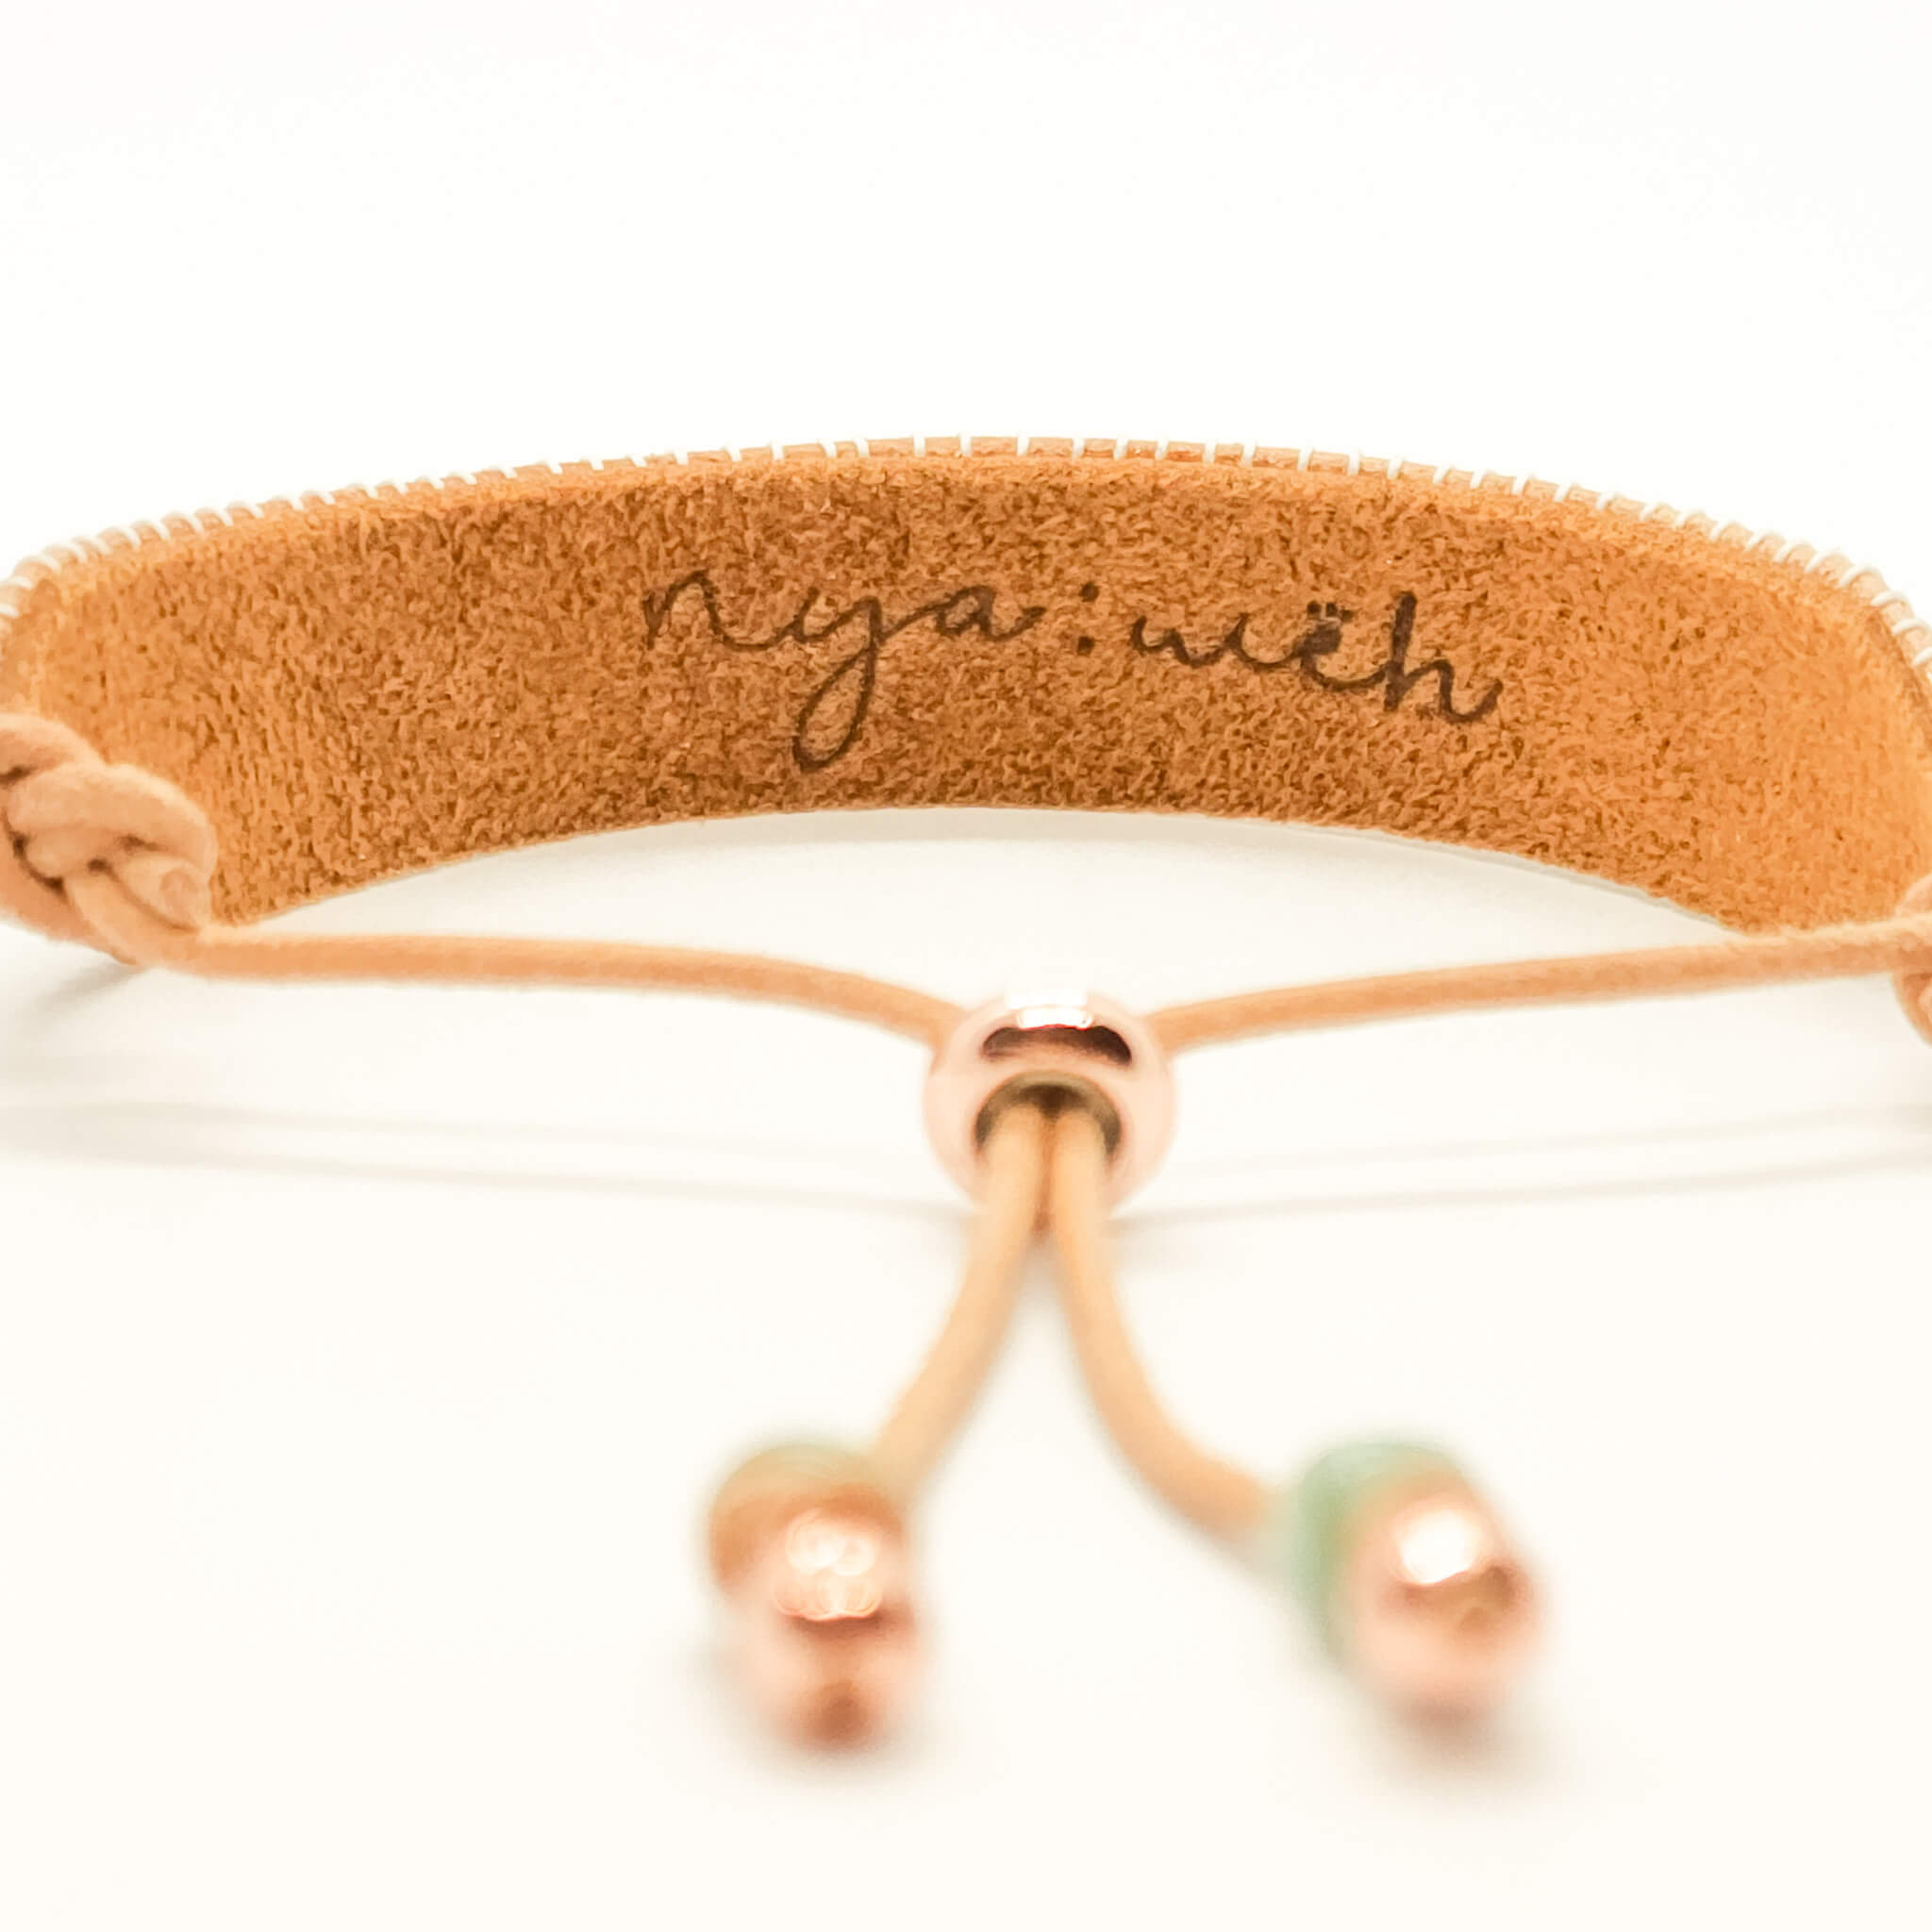 bracelet back view showing leather stamped nyaweh logo